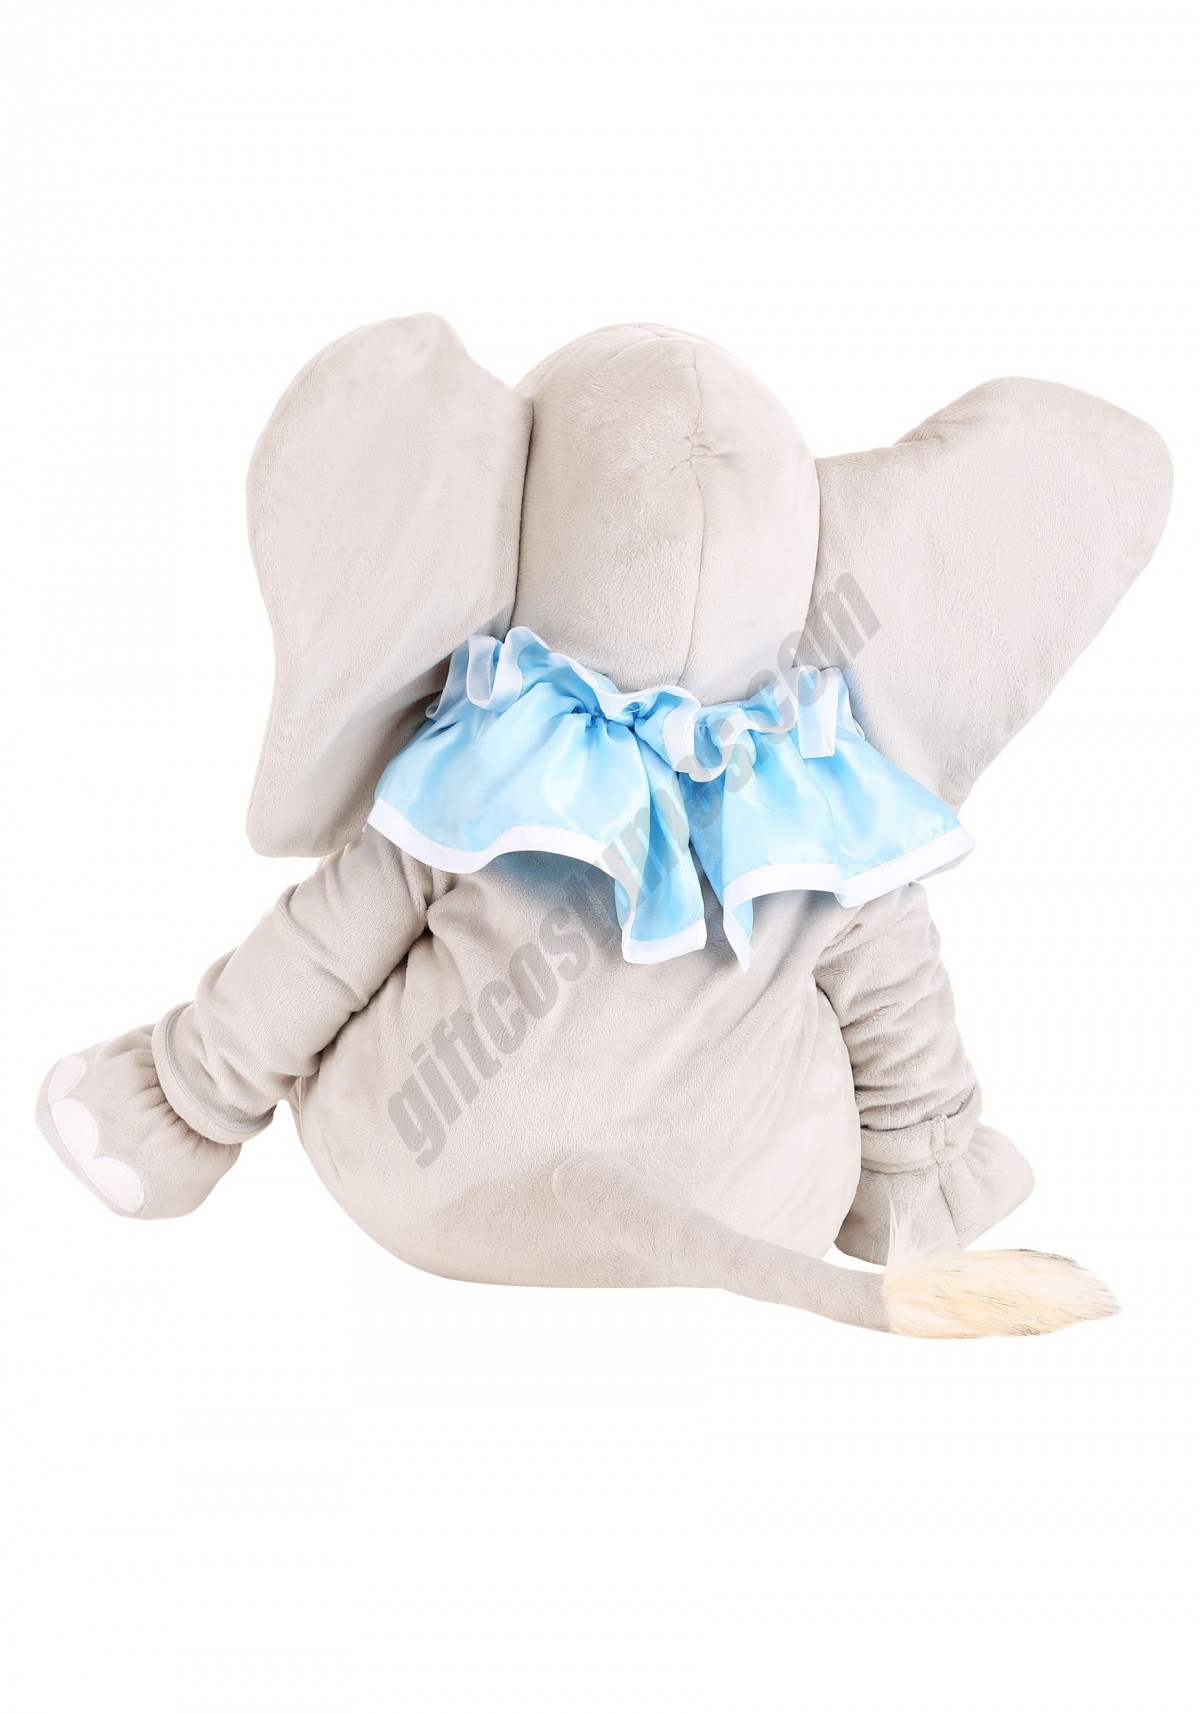 Elo the Elephant Infant Costume Promotions - -2